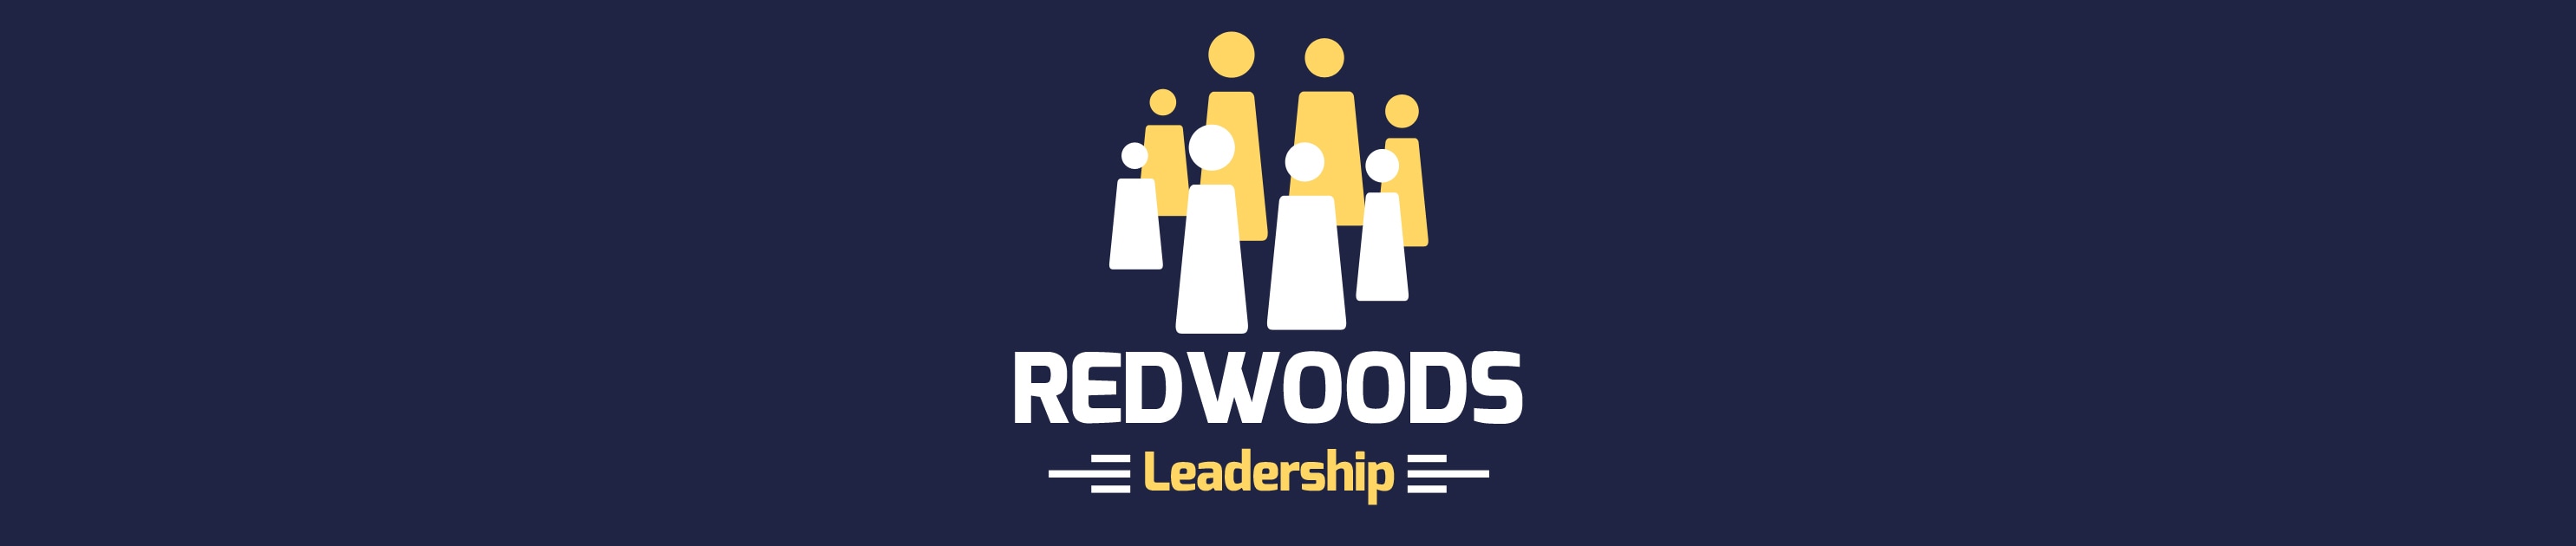 www.redwoodsleadership.com